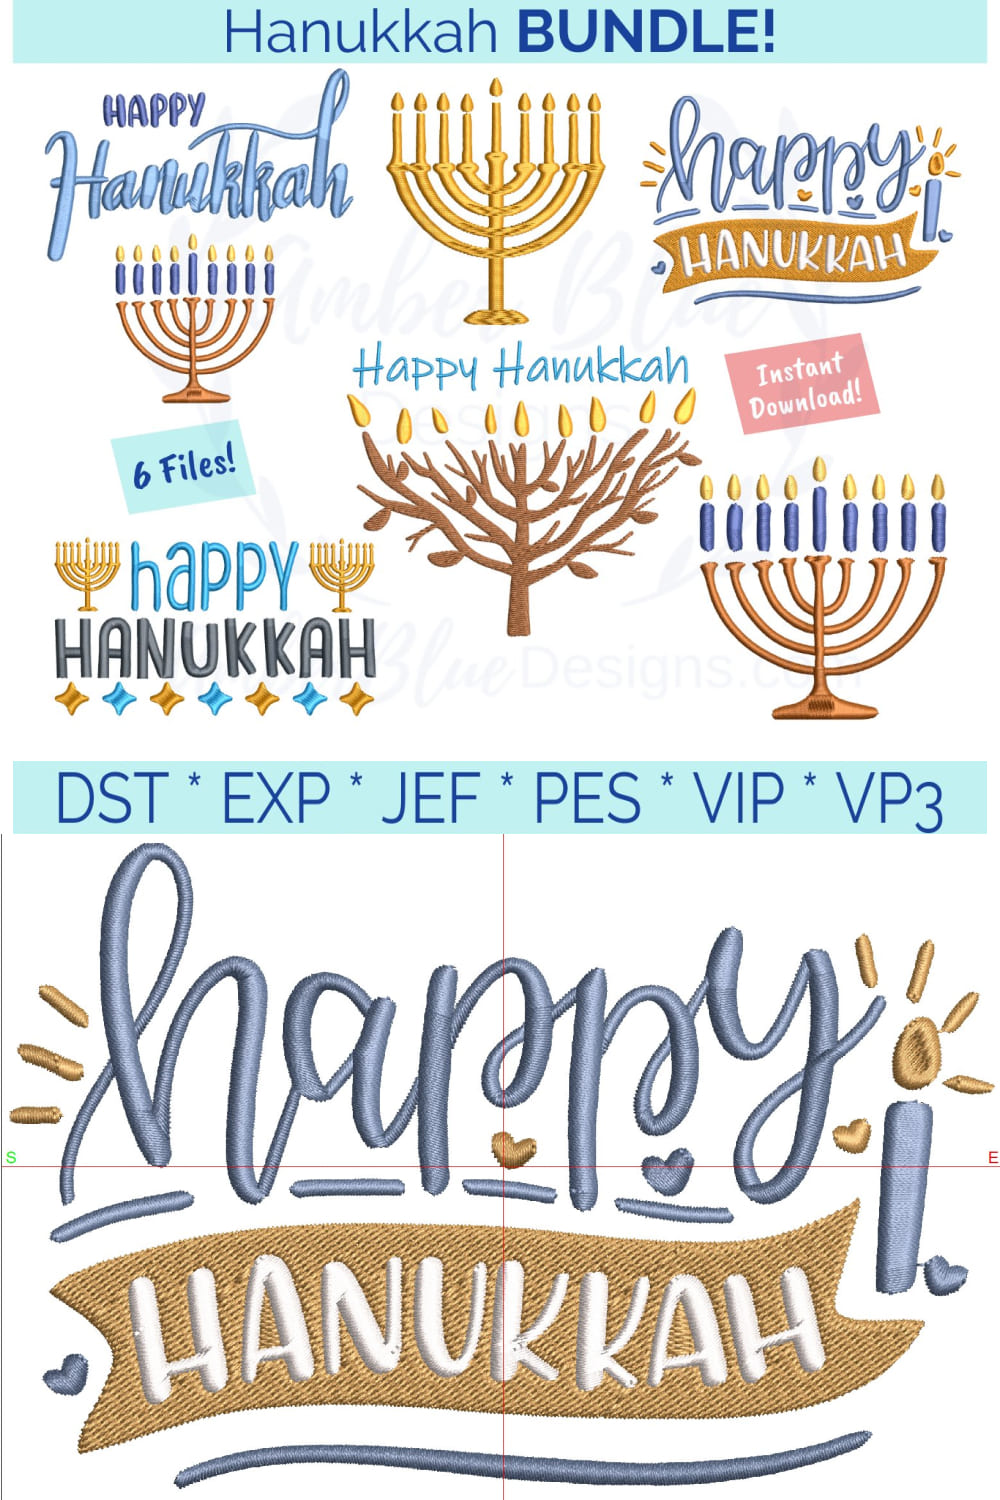 Happy hanukkah embroidery of pinterest.